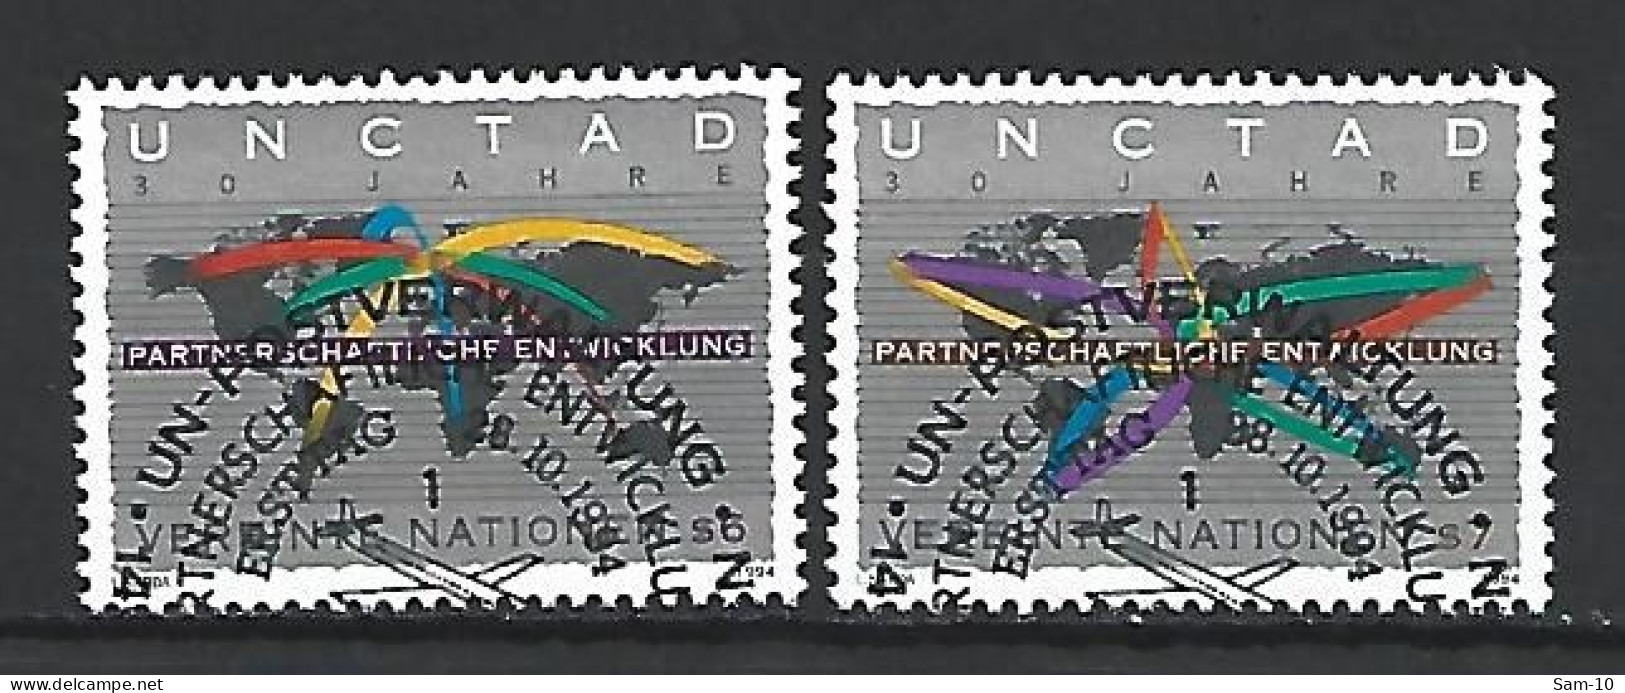 Timbres Nations-Unies Vienne Oblitéré N 196 / 197 - Gebraucht